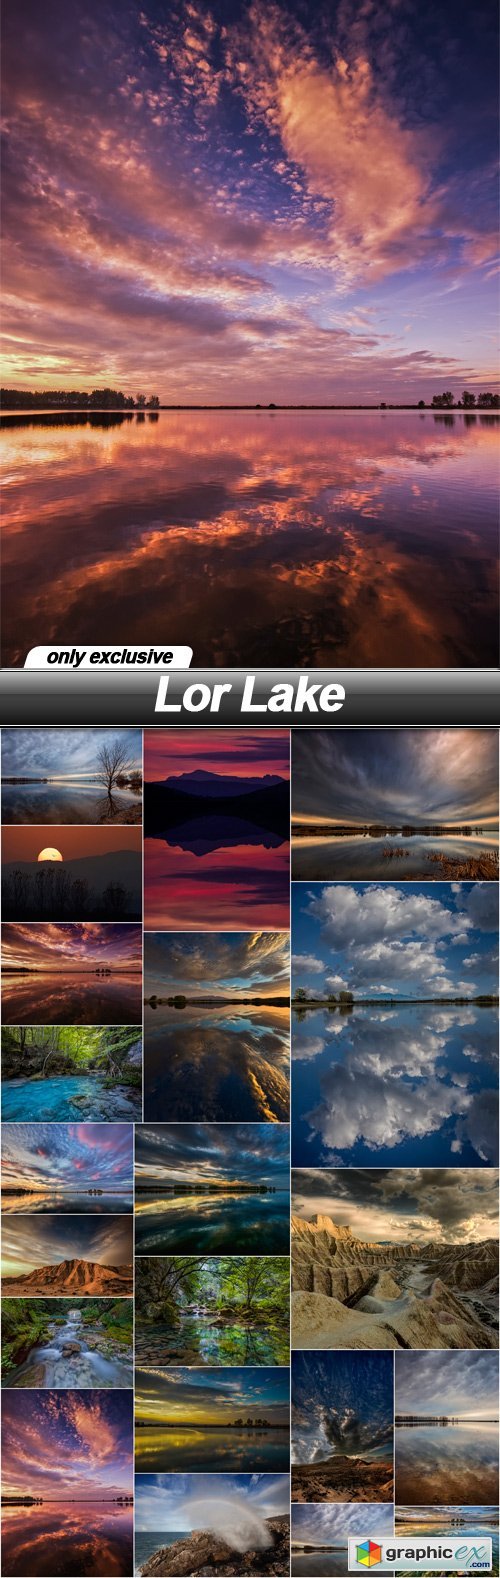 Lor Lake - 21 UHQ JPEG